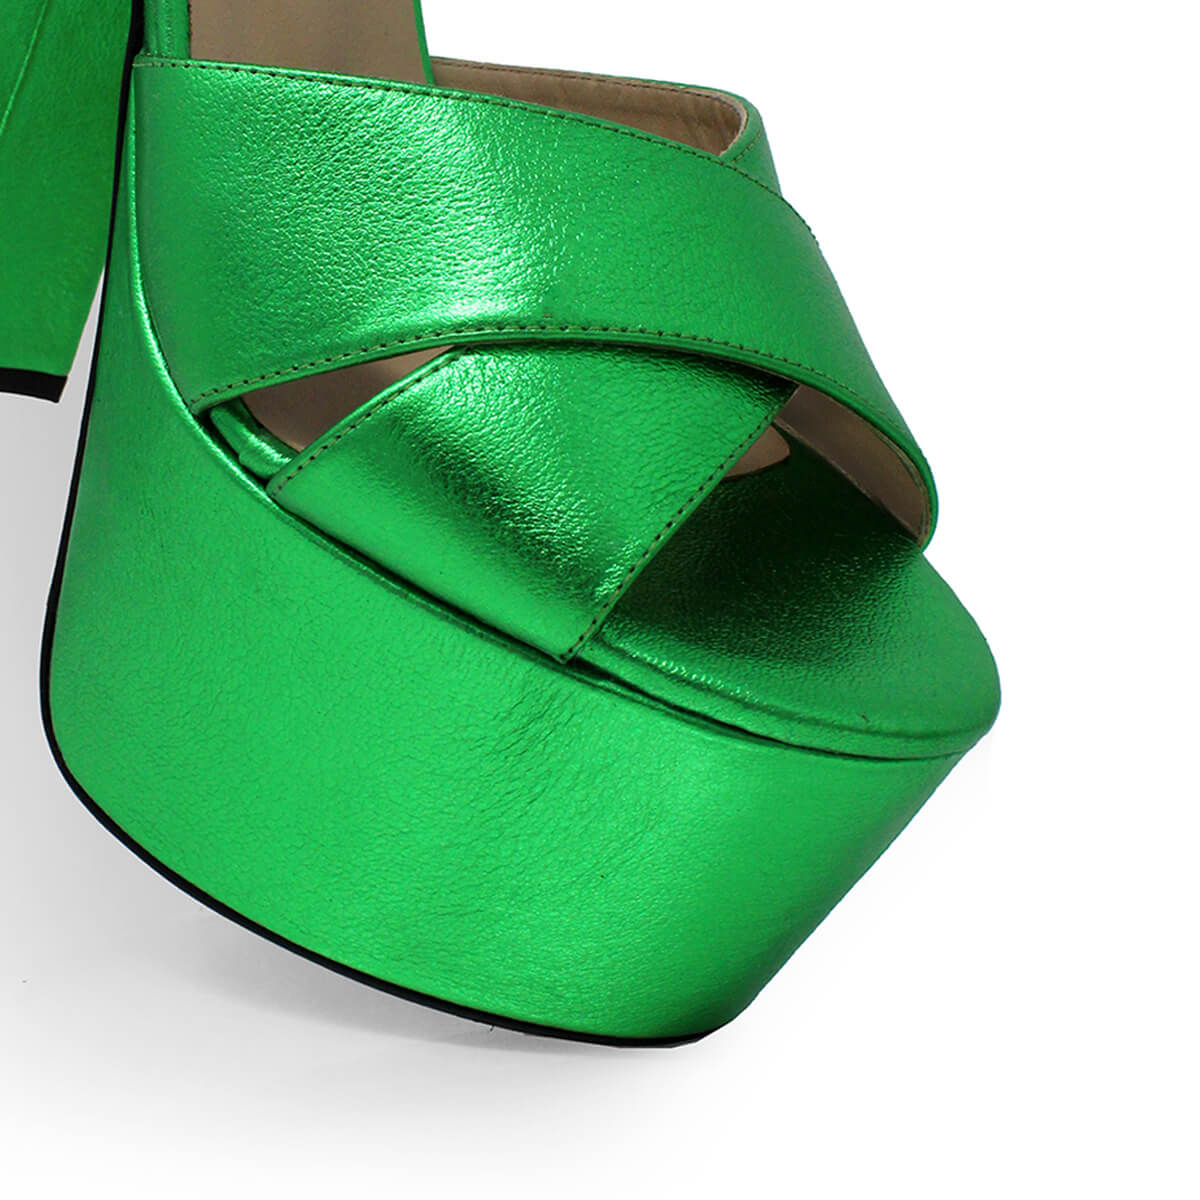 AURA 150 - Verde Metalico Regina Romero Zapato Sandalia Plataforma Tacon Alto Para Dama en Piel